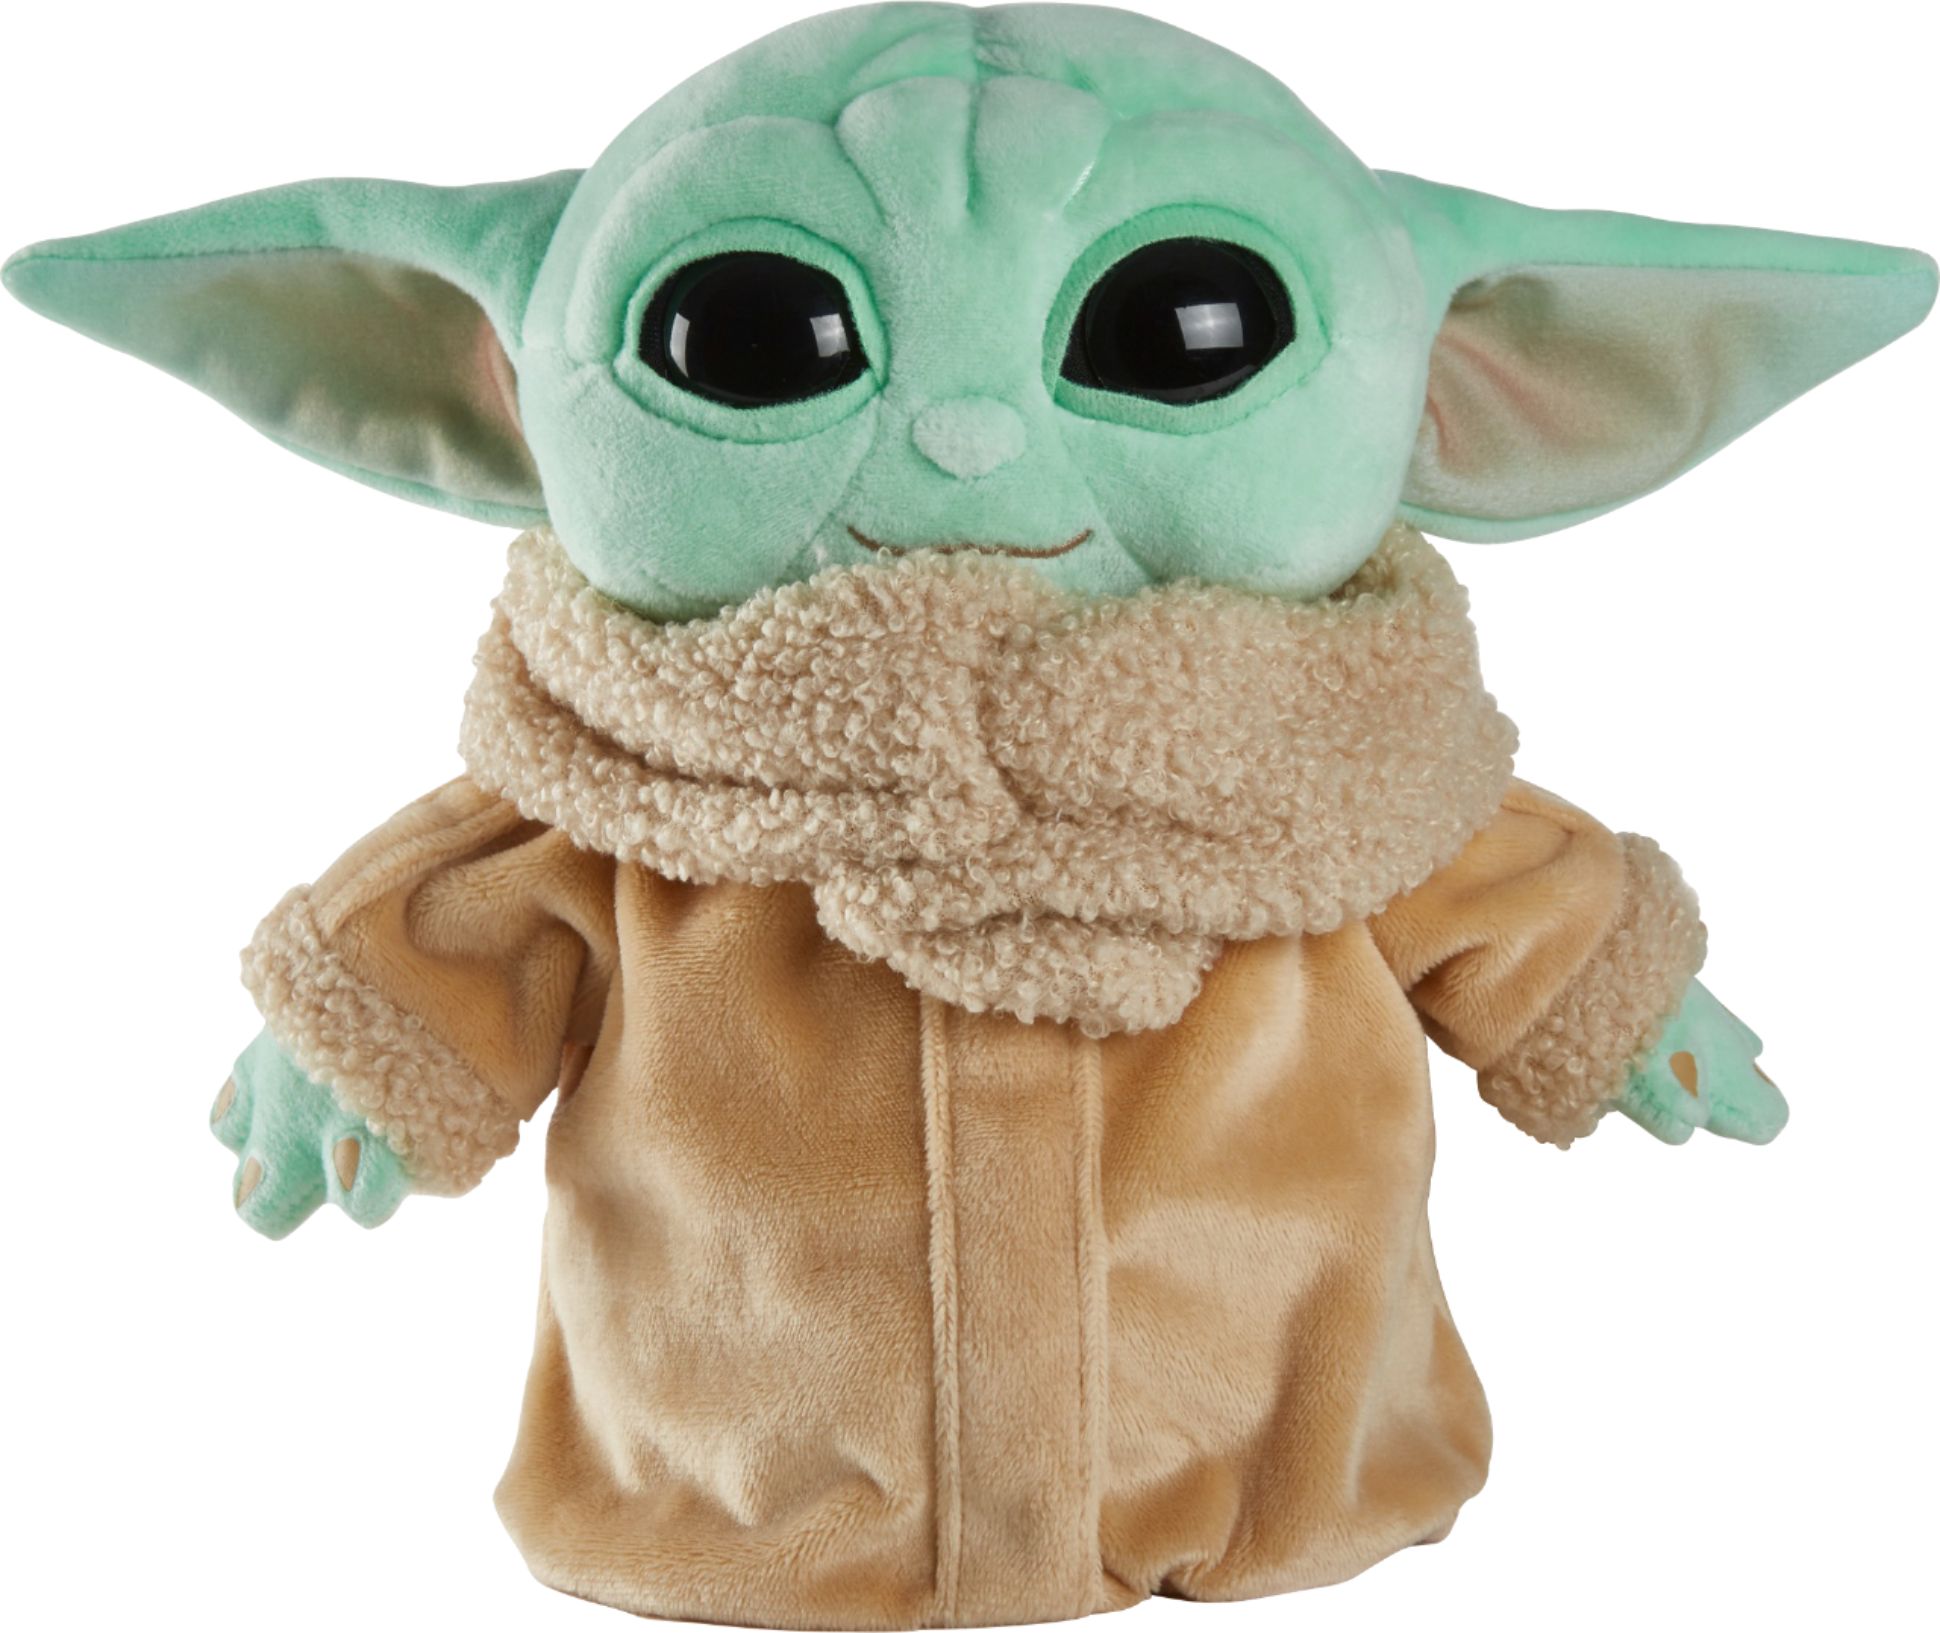 Star Wars Baby Yoda 8 inch Plush The Mandalorian The Child NEW w/ Tags 